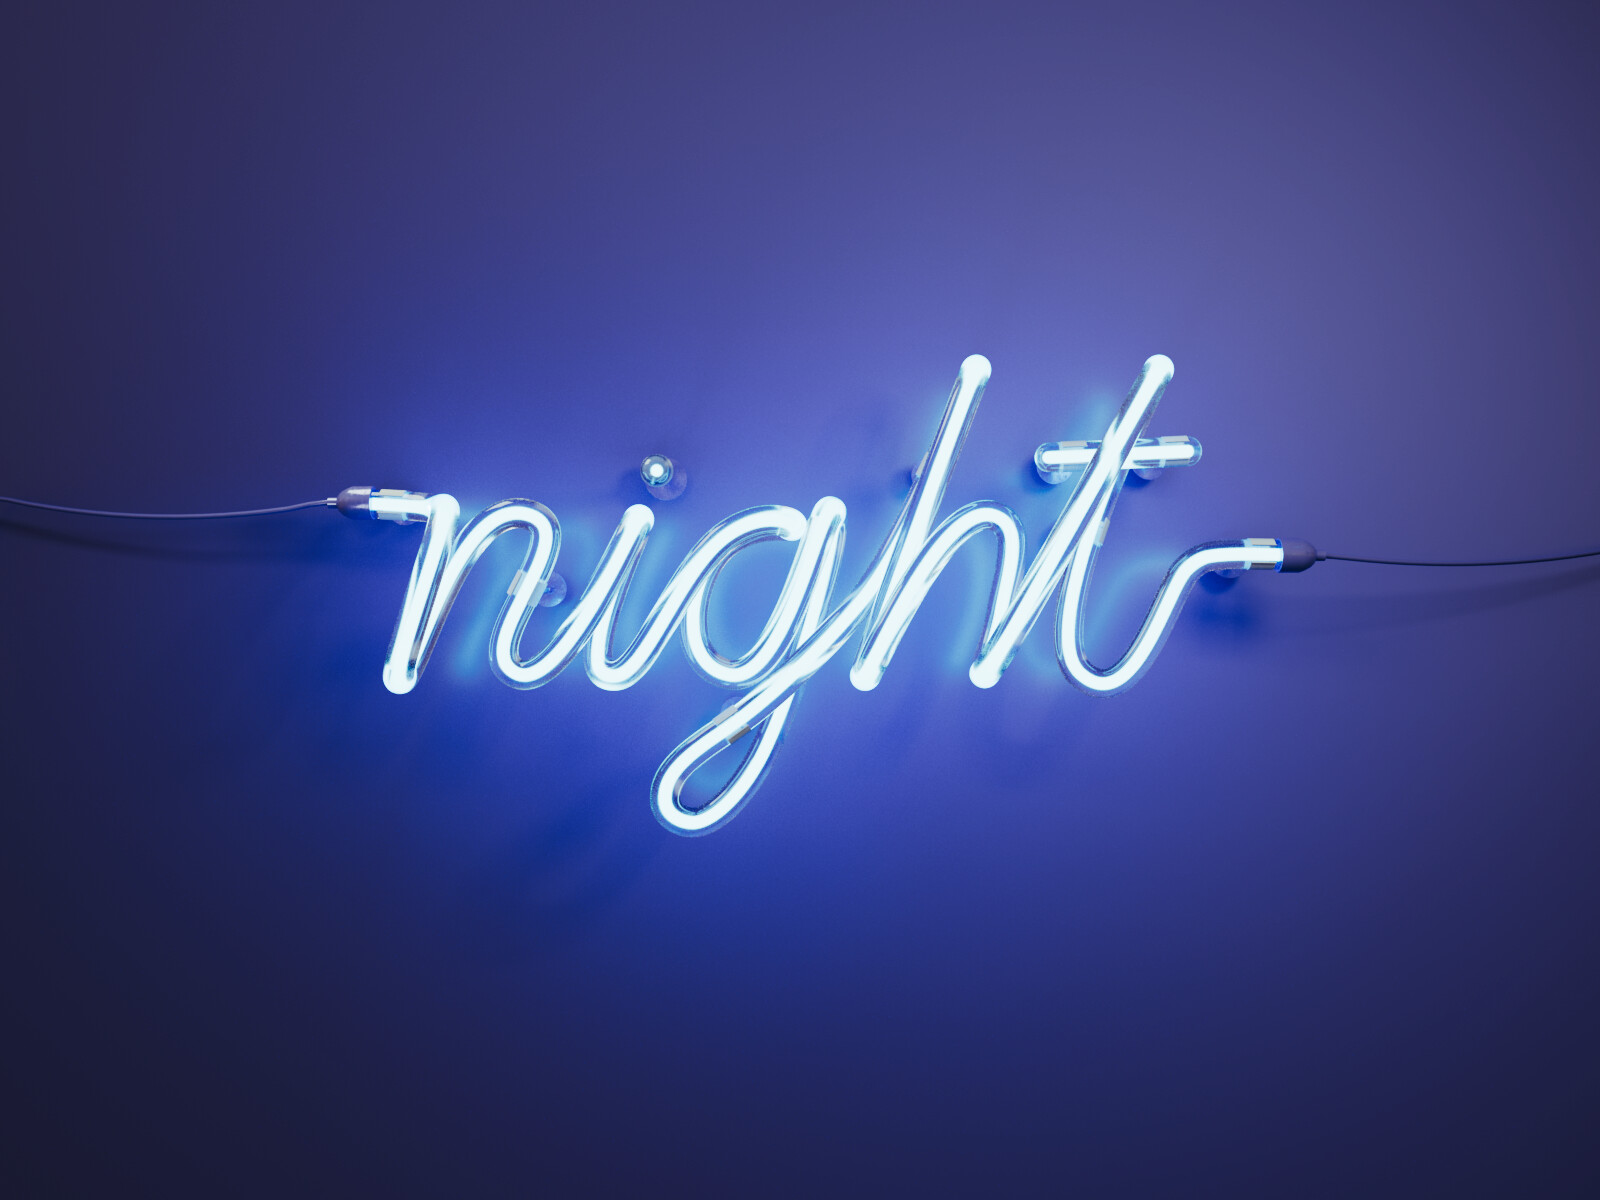 One night word. Night Word. Blue Word Wallpaper. Night keyword.